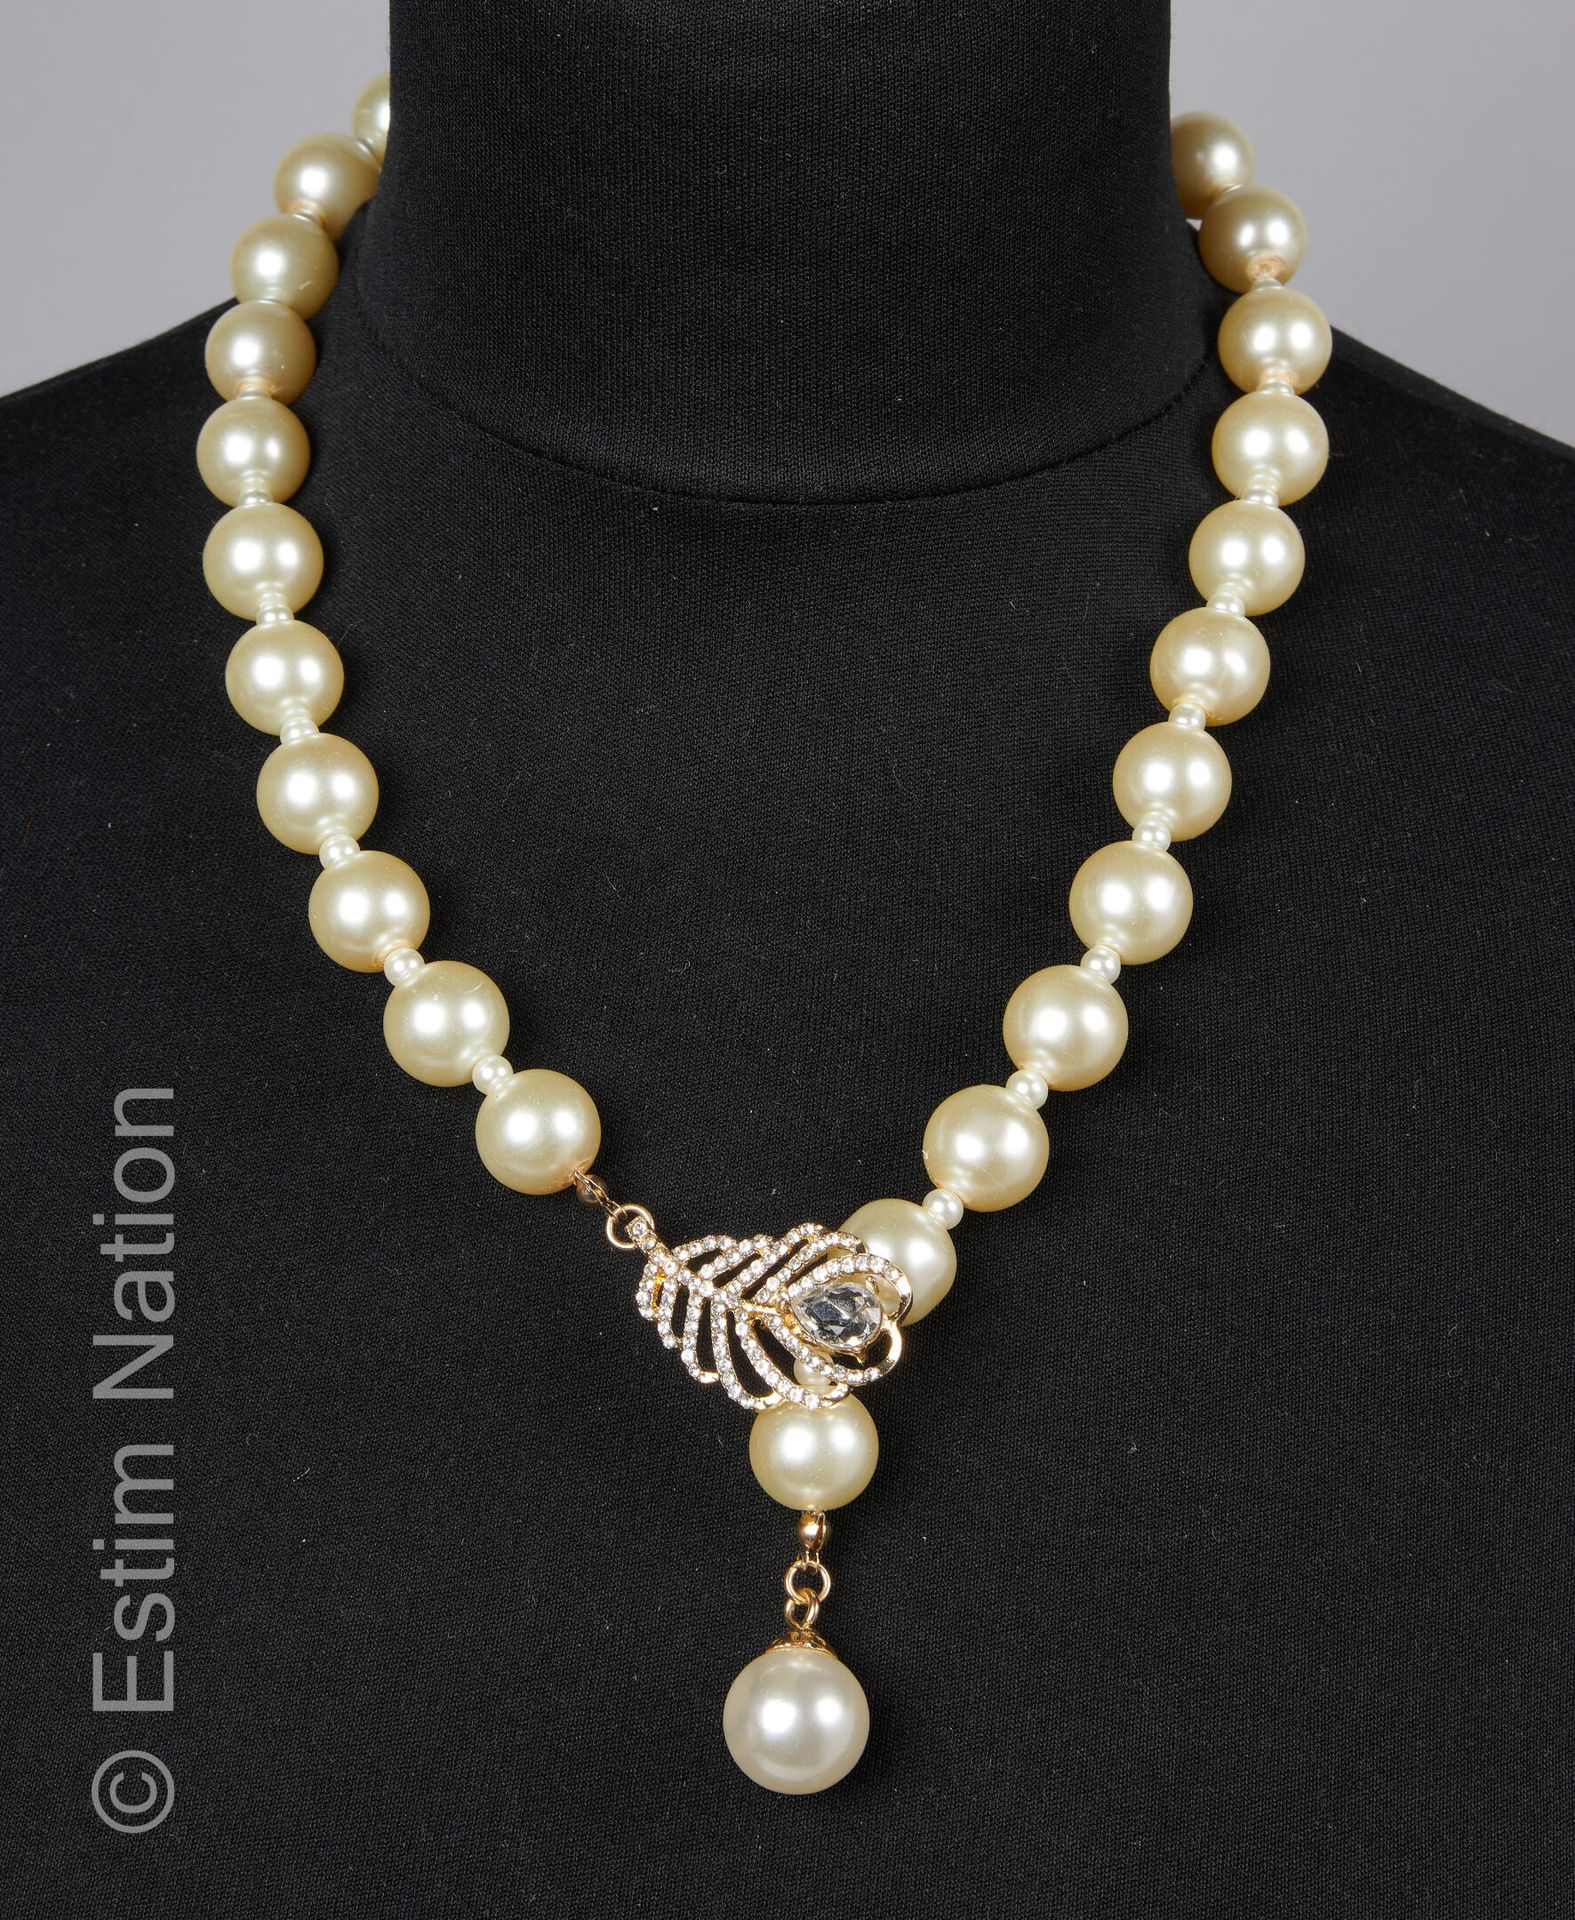 COLLIER PERLES FANTAISIE 镶有大颗幻想珍珠的项链。可调节高度的金属叶子扣，有水钻点缀。 
长度：49厘米